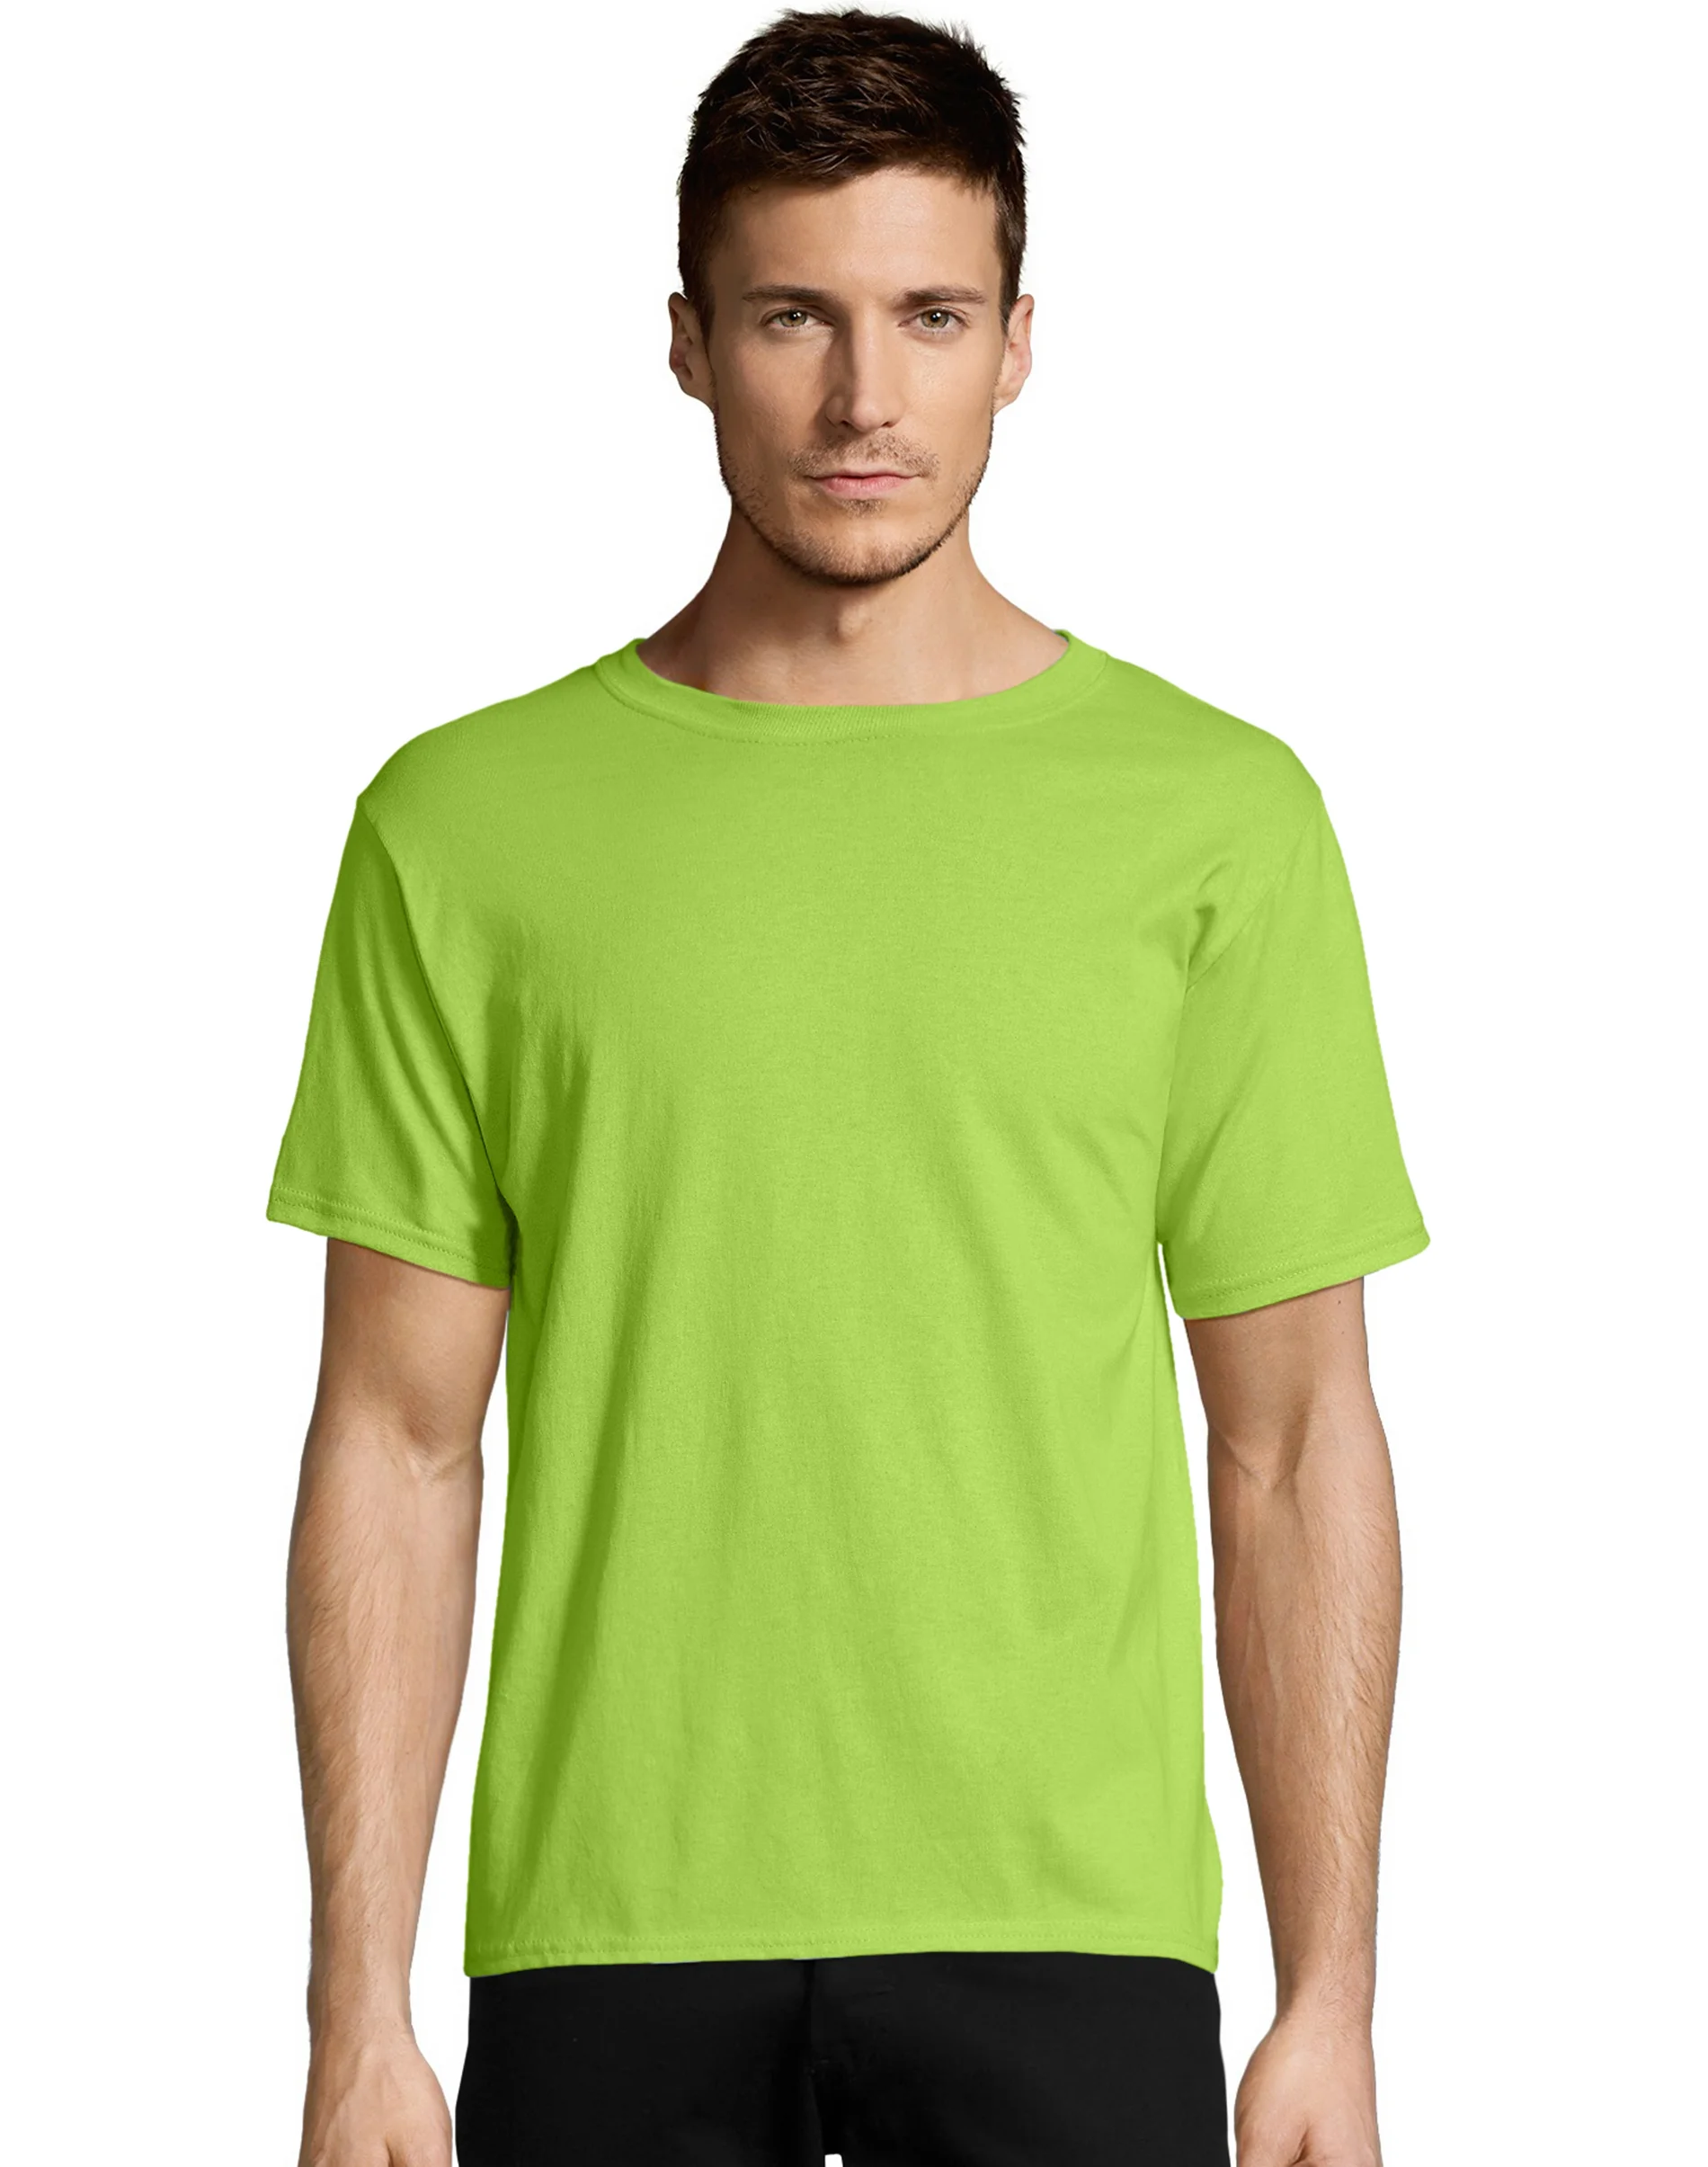 NEW Hanes Adult EcoSmart Short Sleeve Crewneck Lime T-Shirt, Size Small, 5170 - $9.00